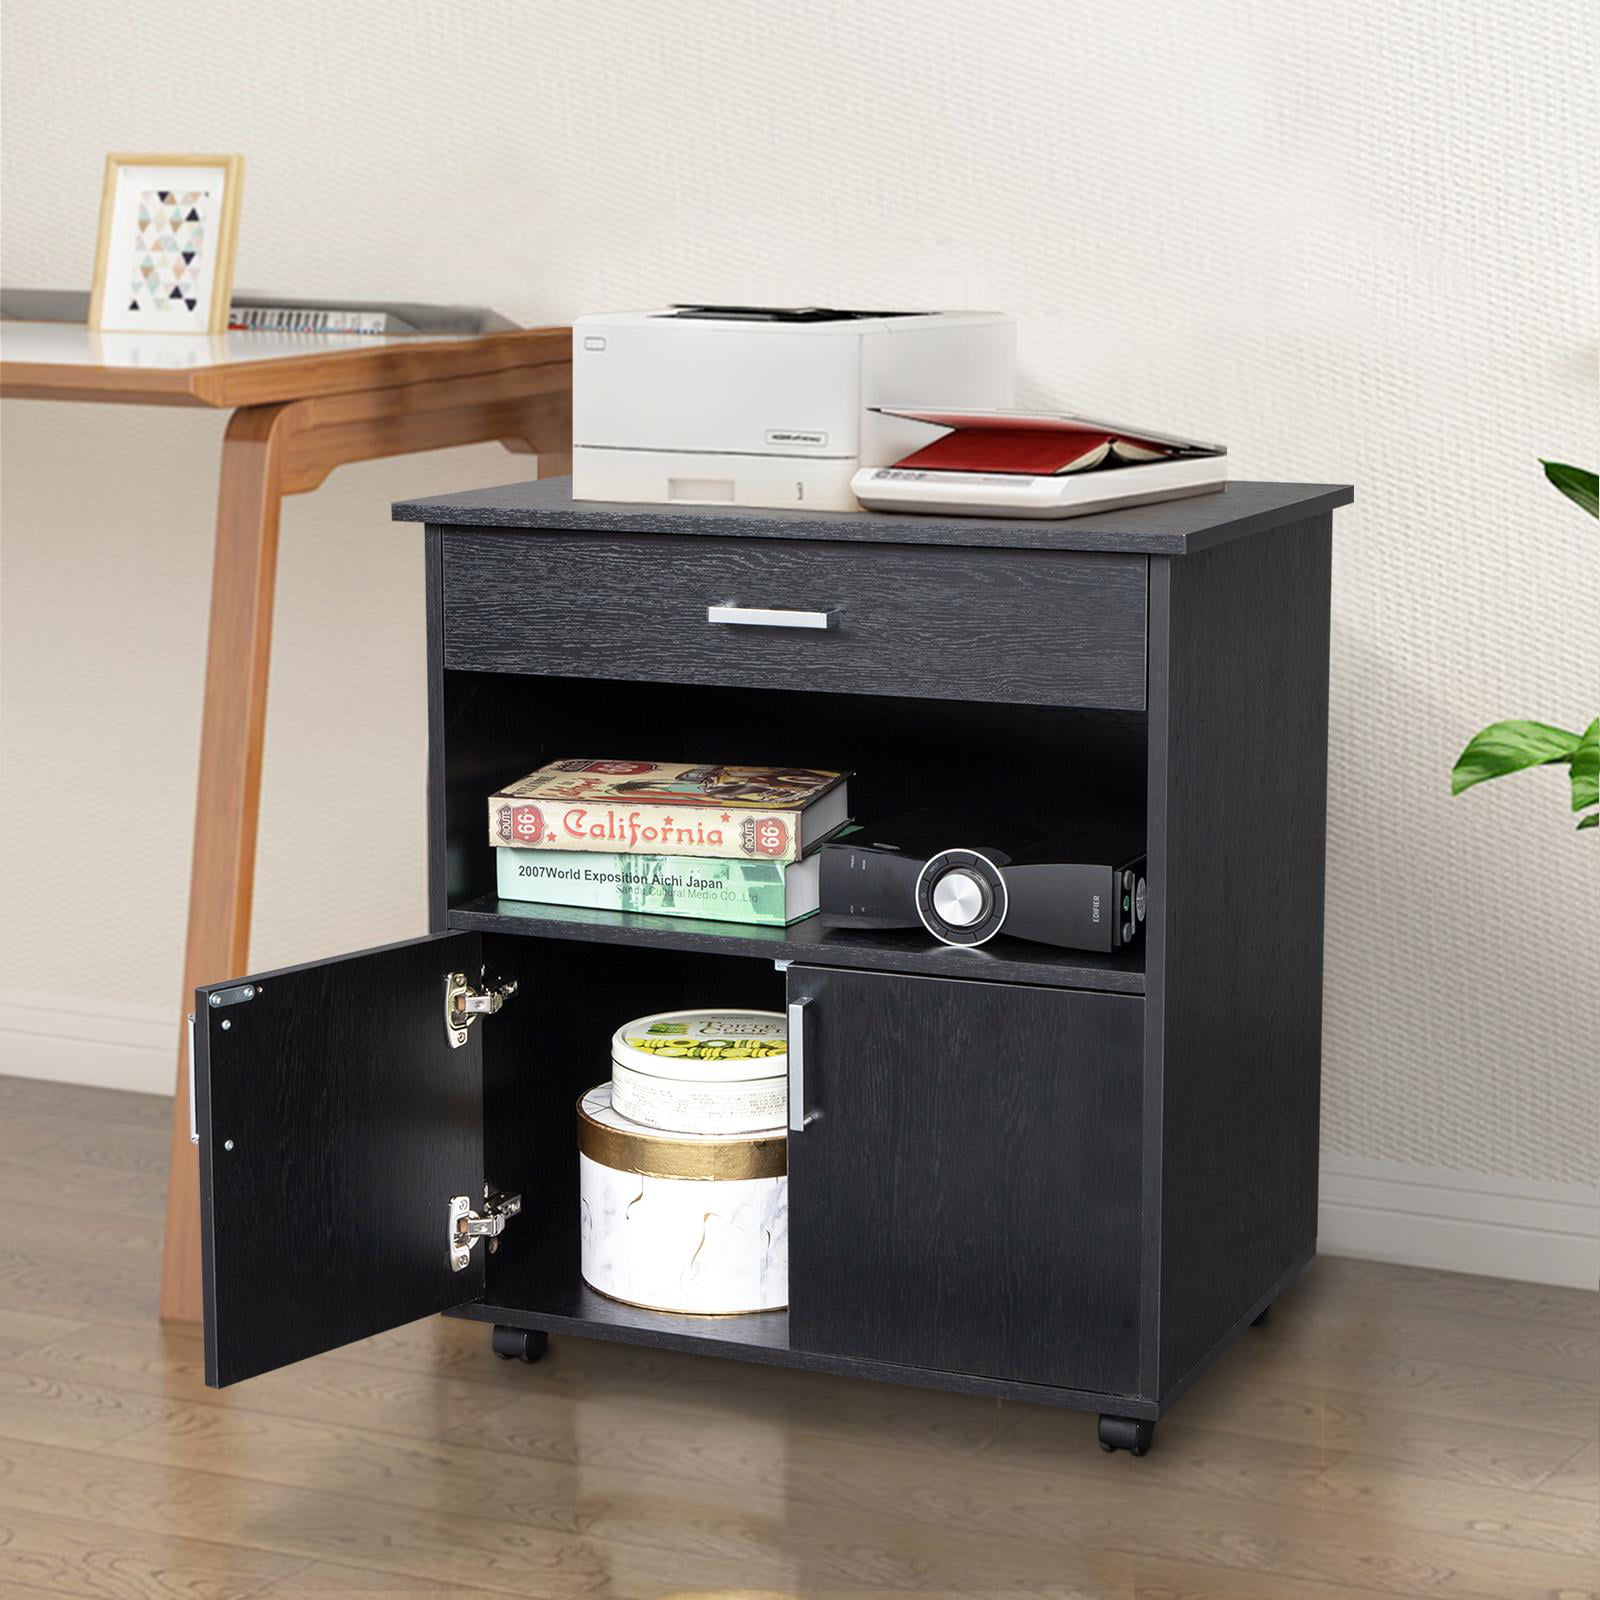 Details about   Modern 3-Drawer File Cabinet Wooden Home Office Supplies Storage Organizer Black 